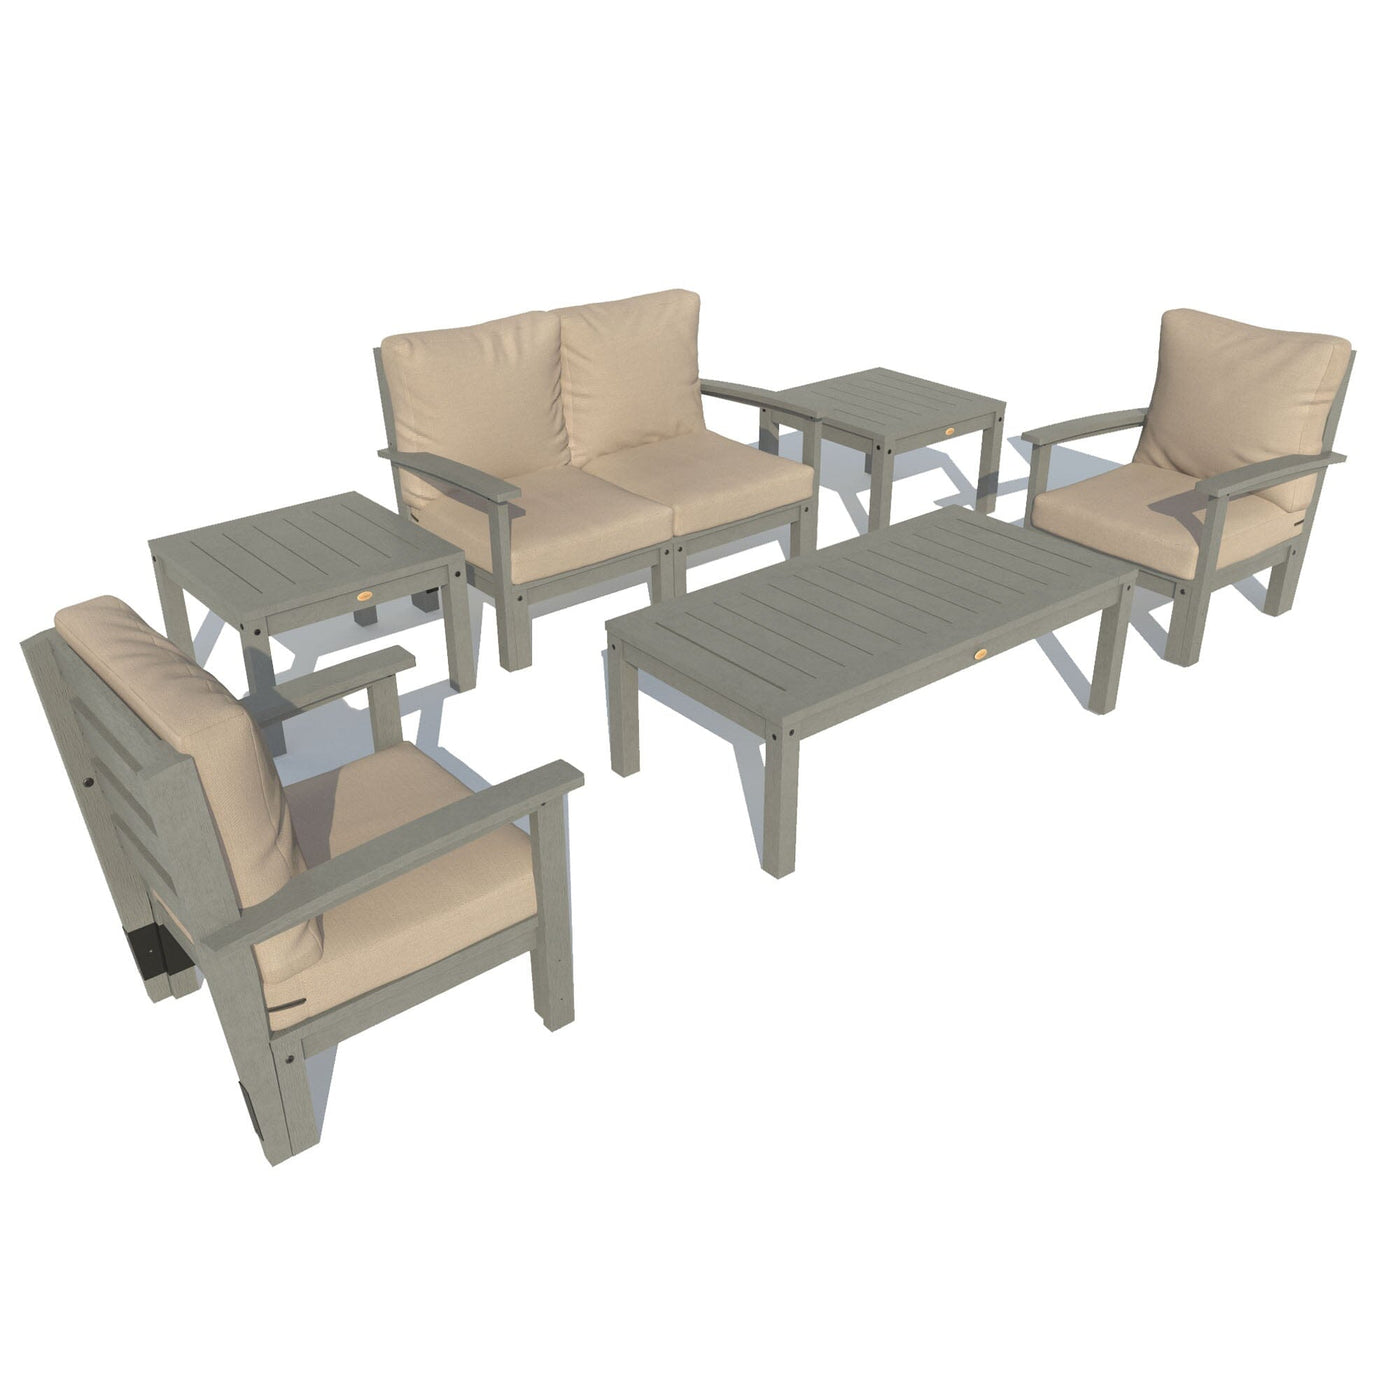 Bespoke Deep Seating: Loveseat, Set of 2 Chairs, Conversation Table, and 2 Side Tables Deep Seating Highwood USA Driftwood Coastal Teak 